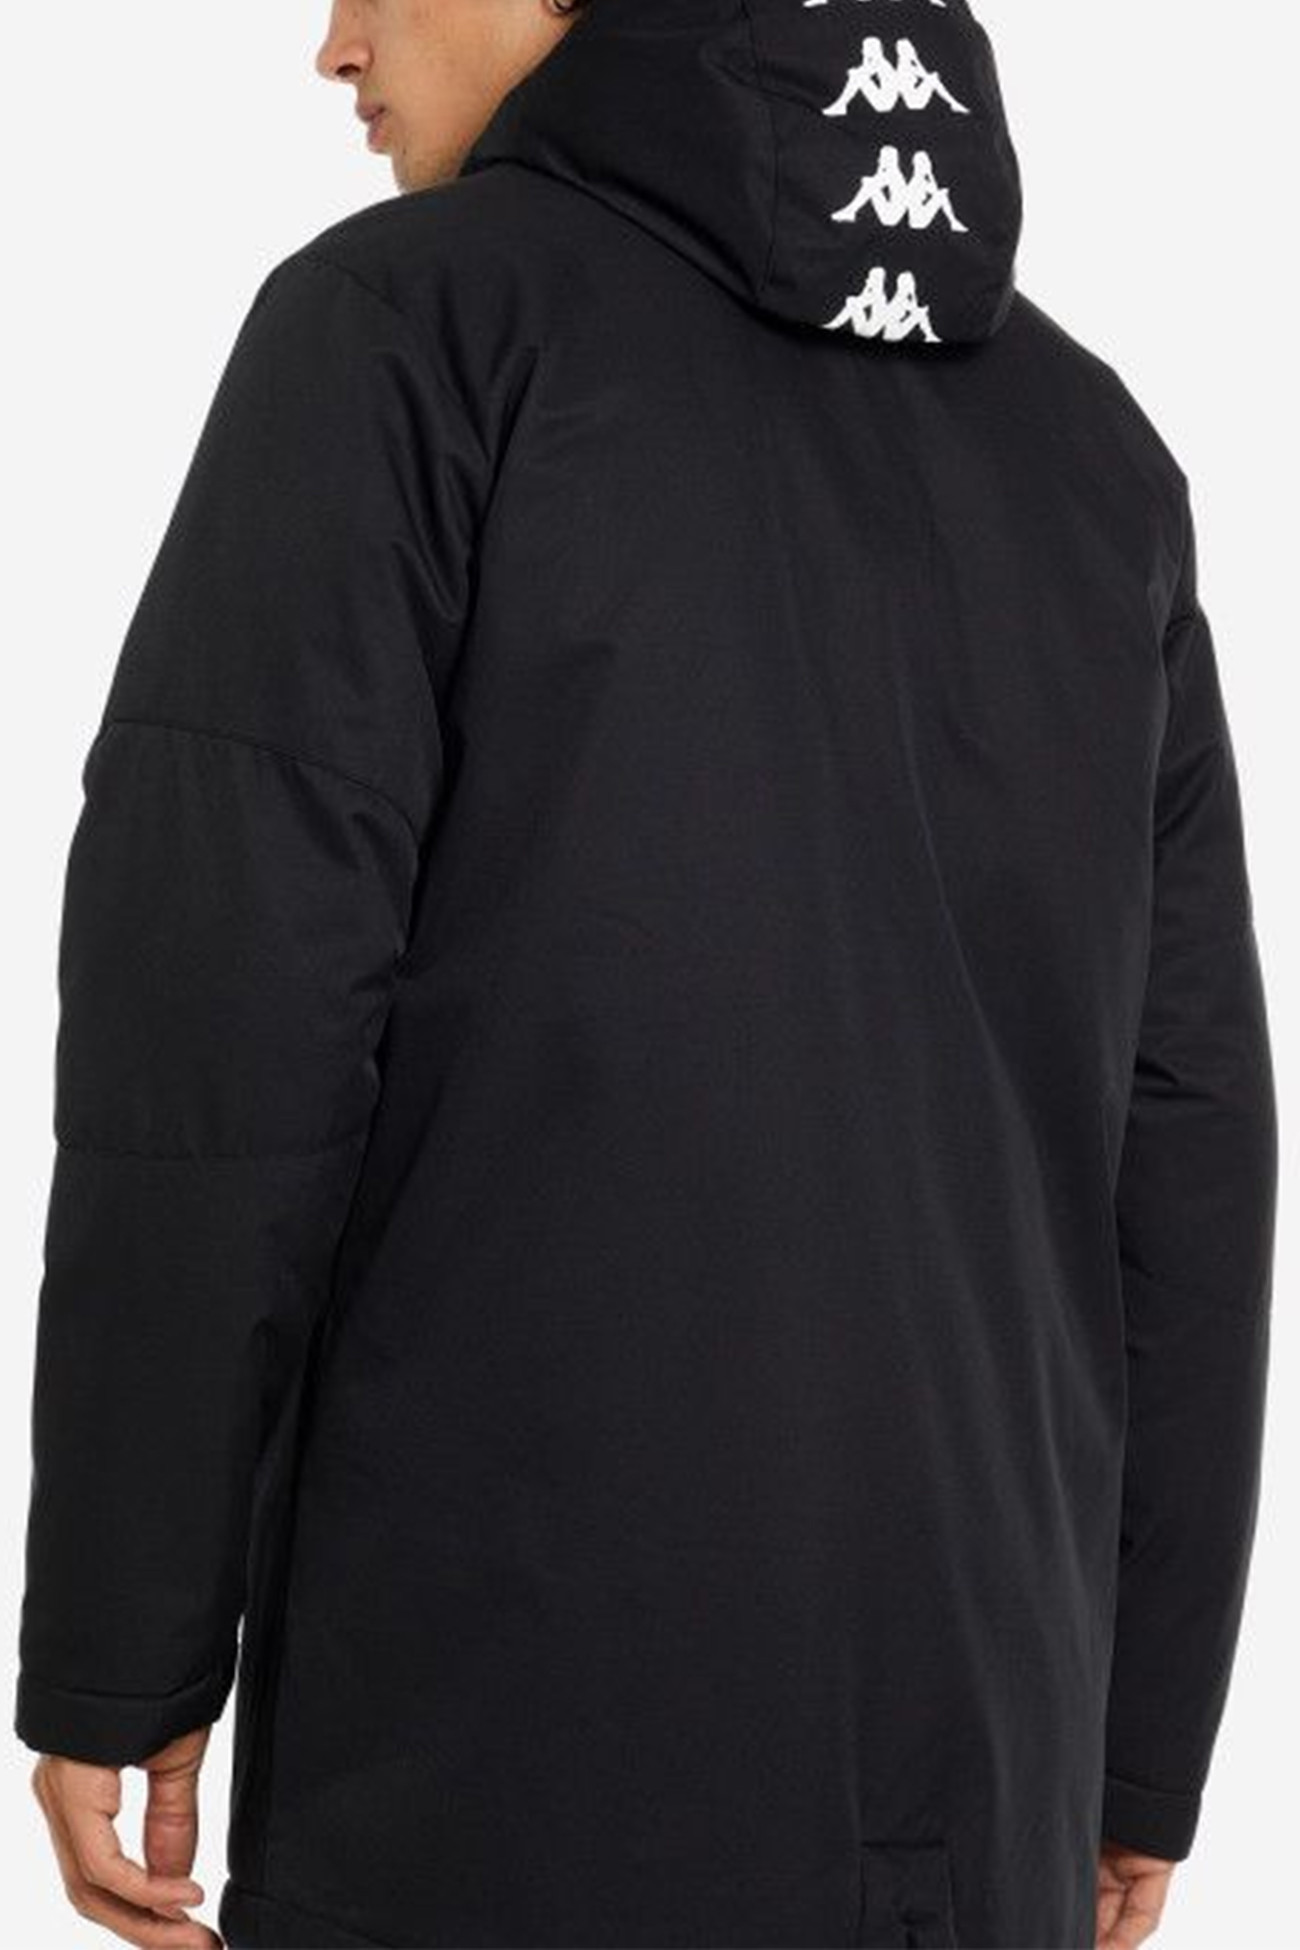 Куртка чоловіча Kappa  чорна 116151-99 изображение 3